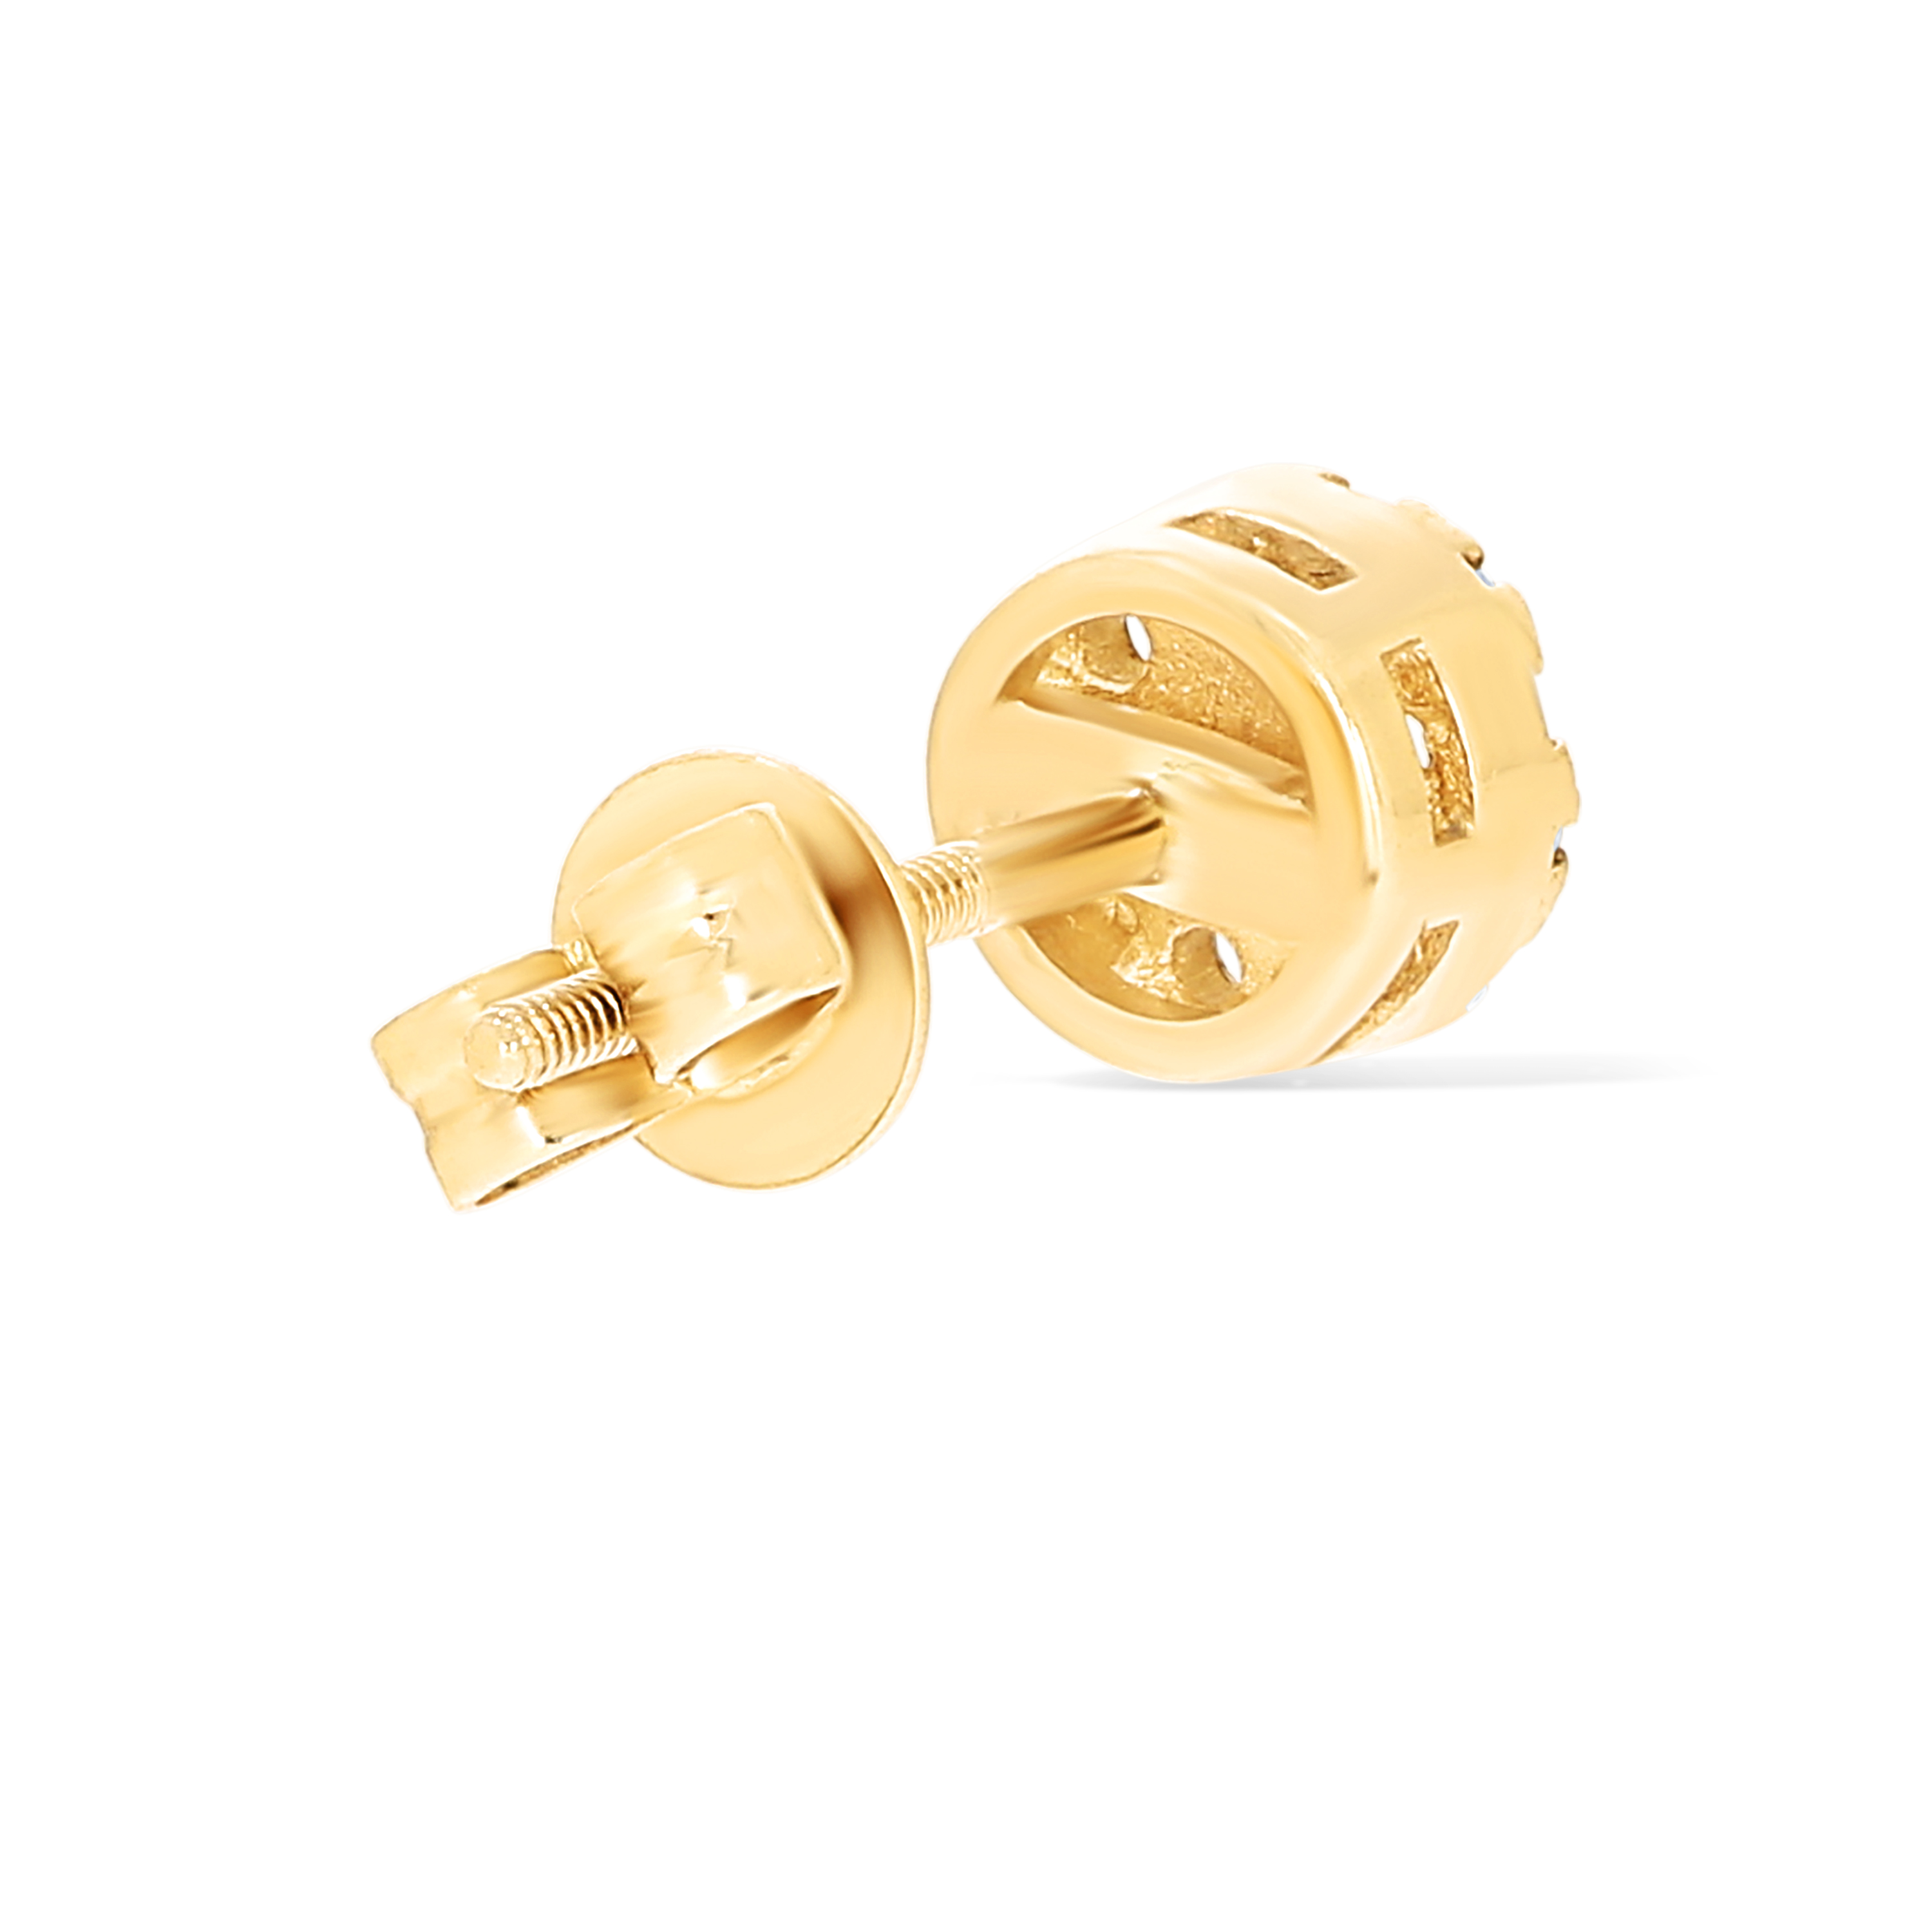 Diamond Cluster Circle Earrings 0.45 ct. 14k Yellow Gold